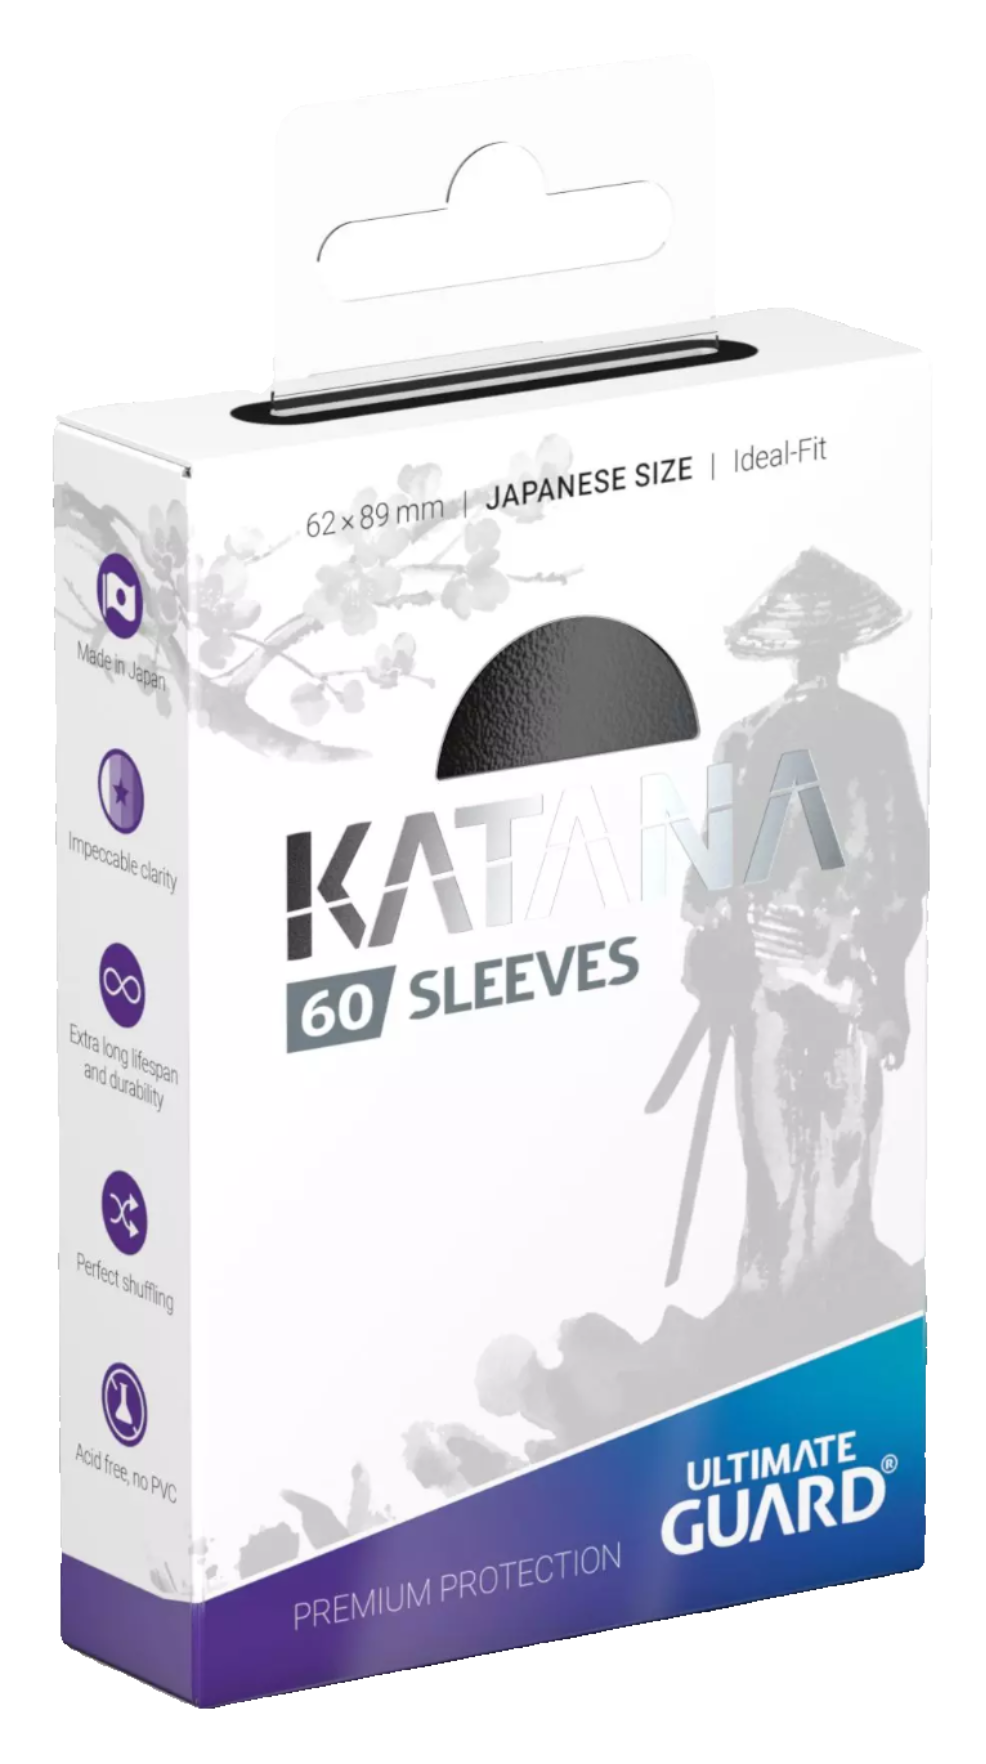 Ultimate Guard - Katana Sleeves - Japanese Size - Ideal-Fit - Black - 60pk